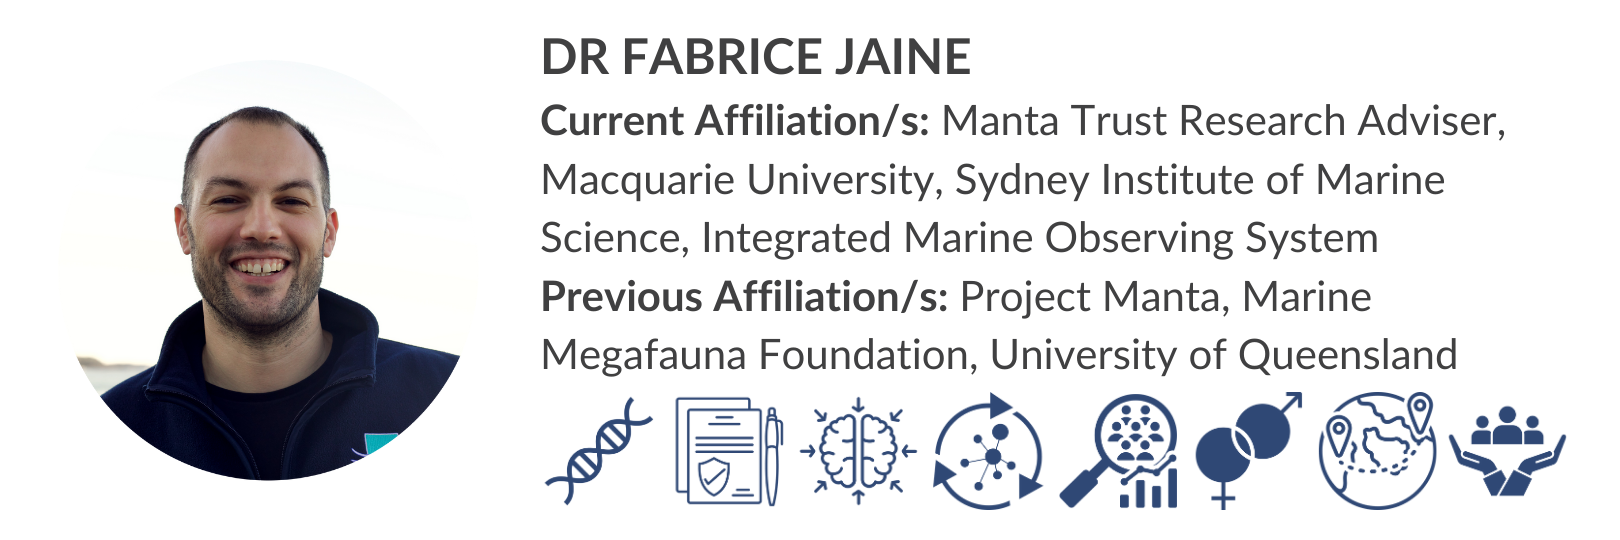 Dr Fabrice Jaine.png